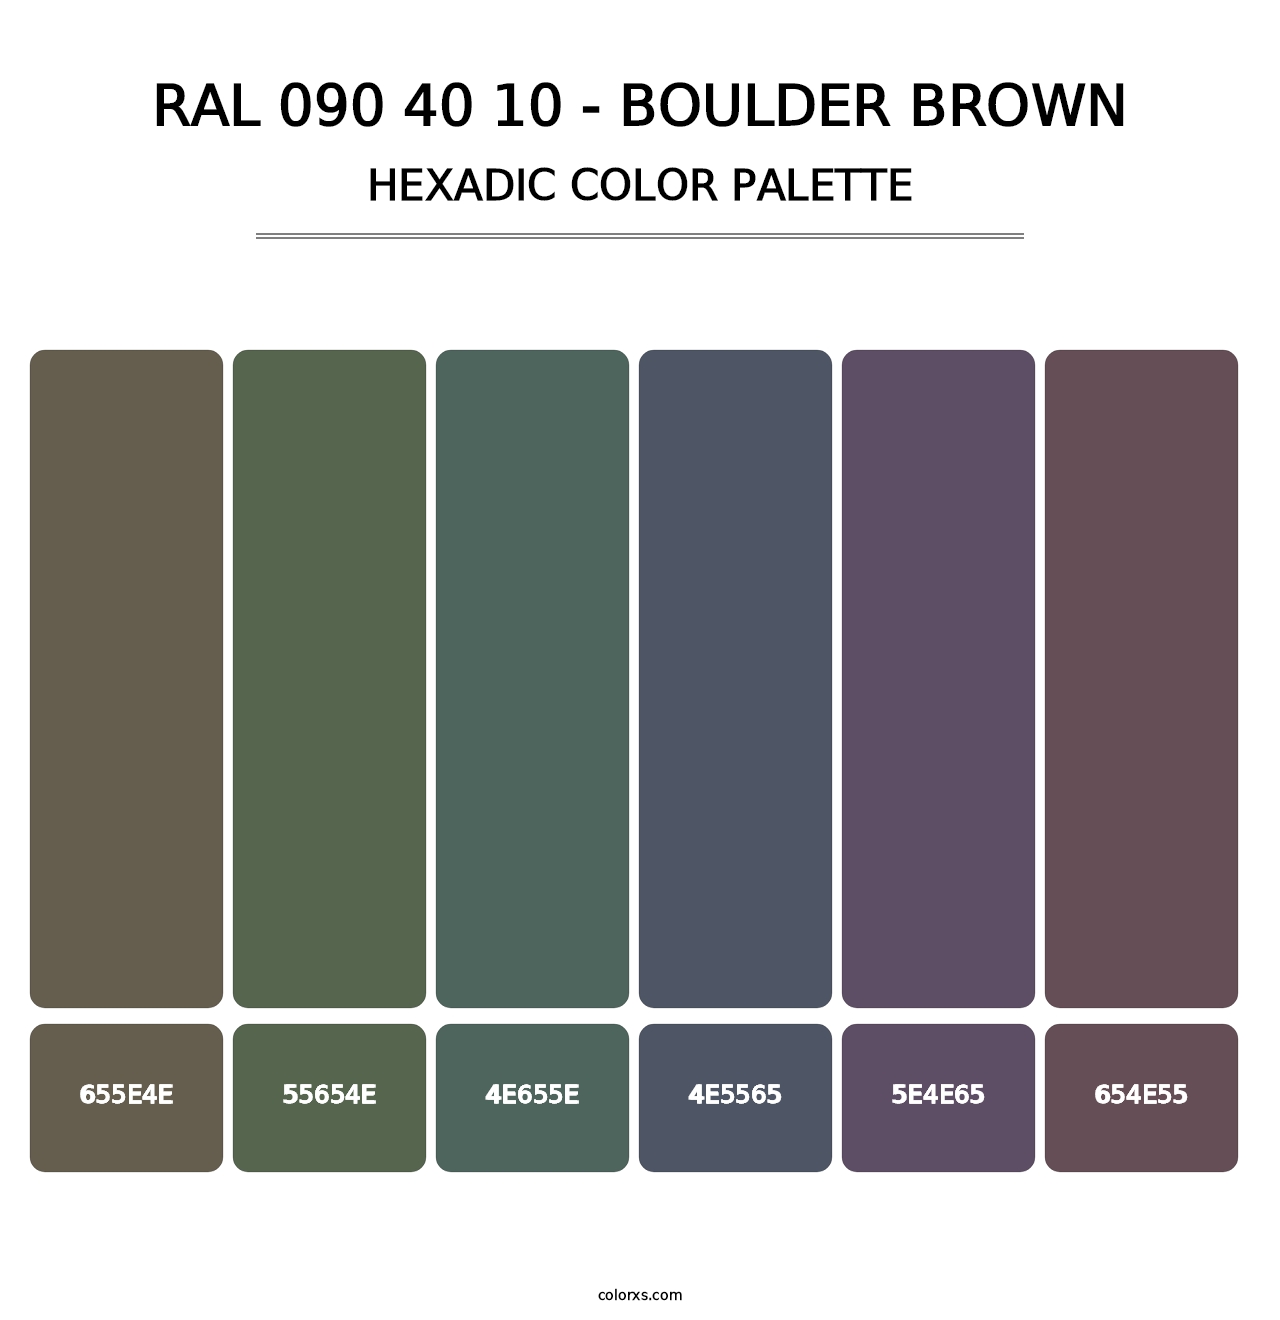 RAL 090 40 10 - Boulder Brown - Hexadic Color Palette